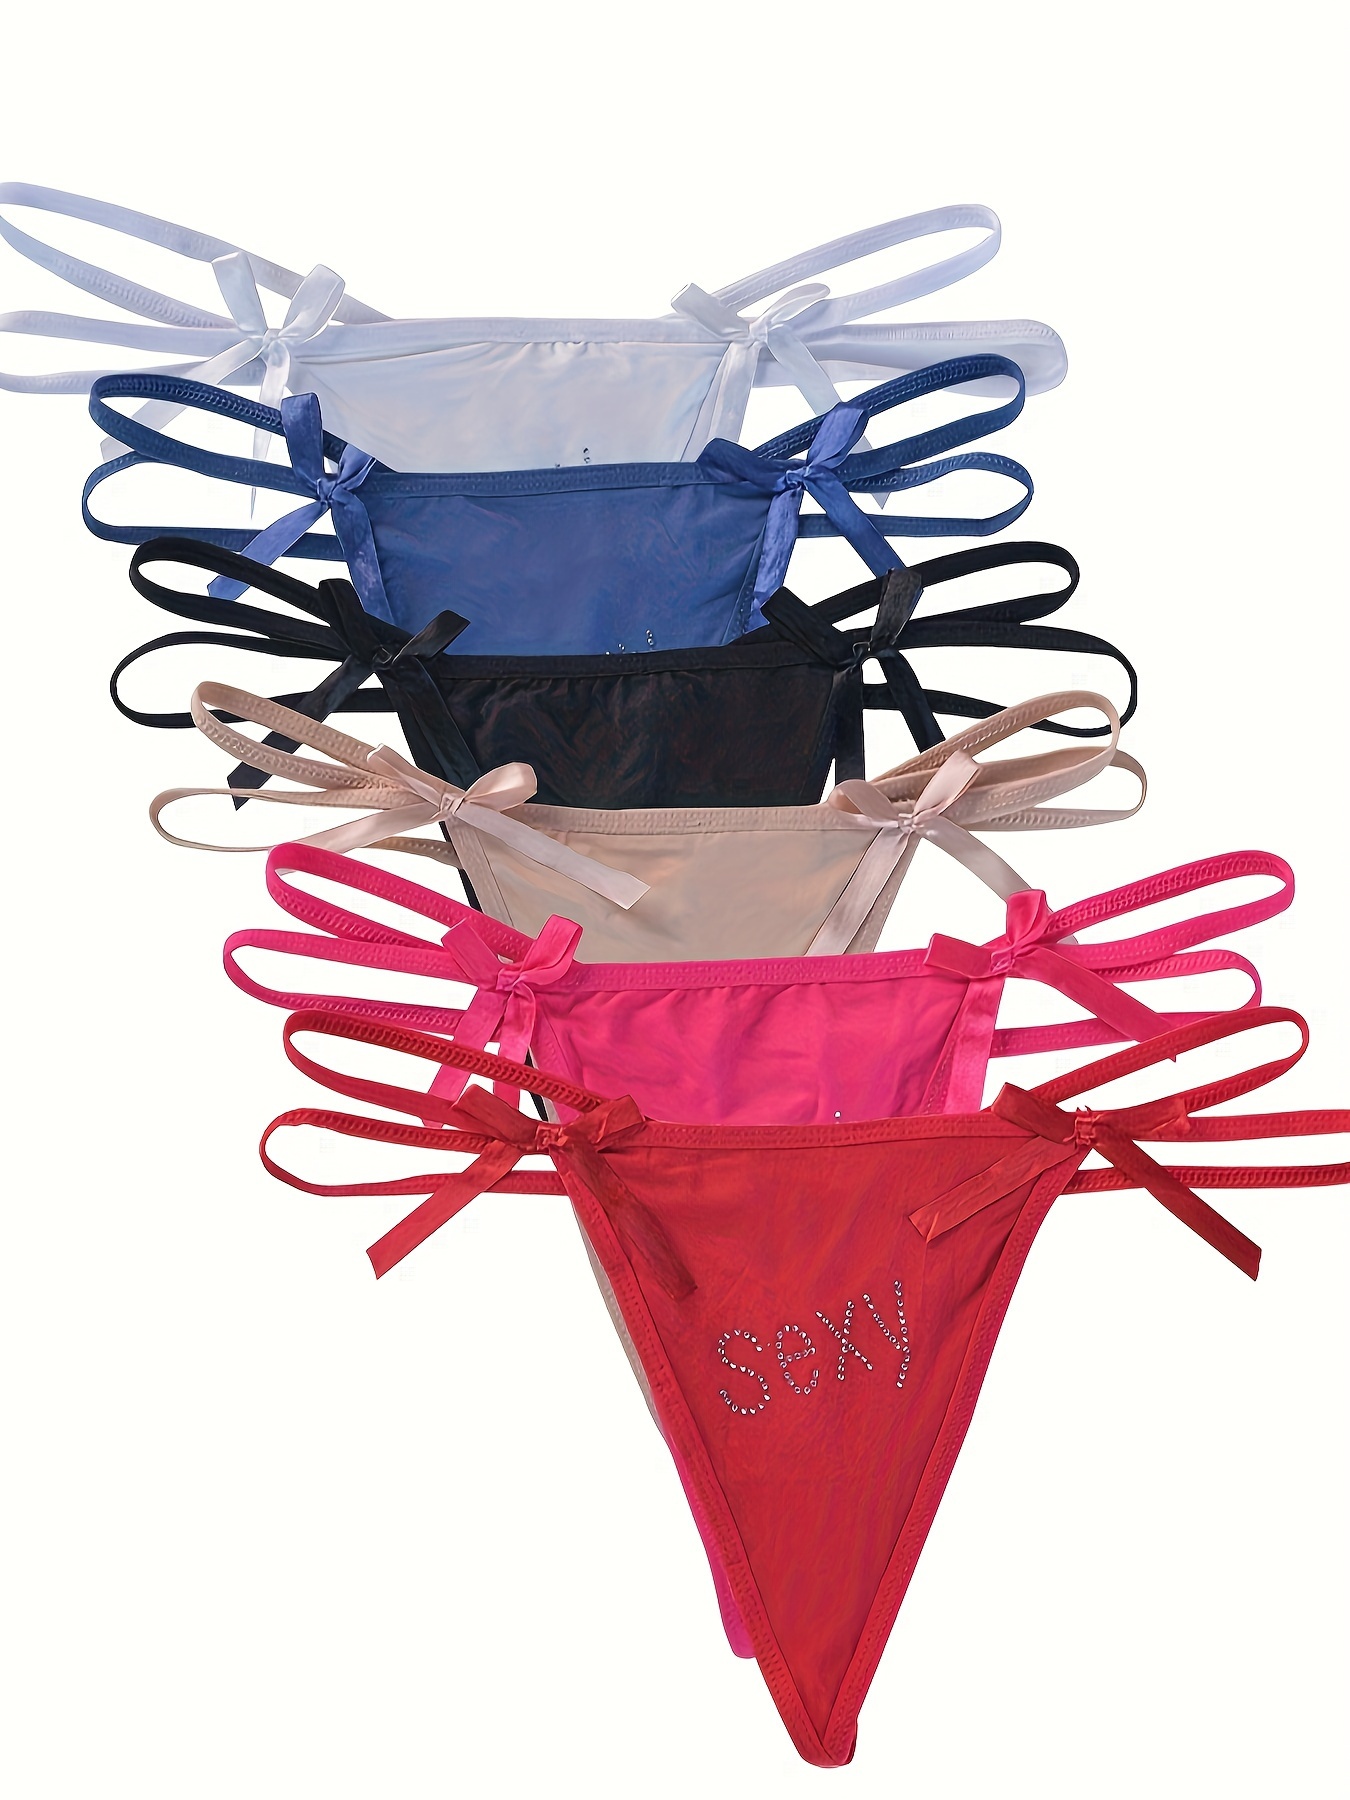 Hot Plain Red Lace Bra & Thong Panty, Bow Rhinestone Decor Spaghetti Strap  Bra & Low Waist Panties Lingerie Set, Women's Lingerie & Underwear